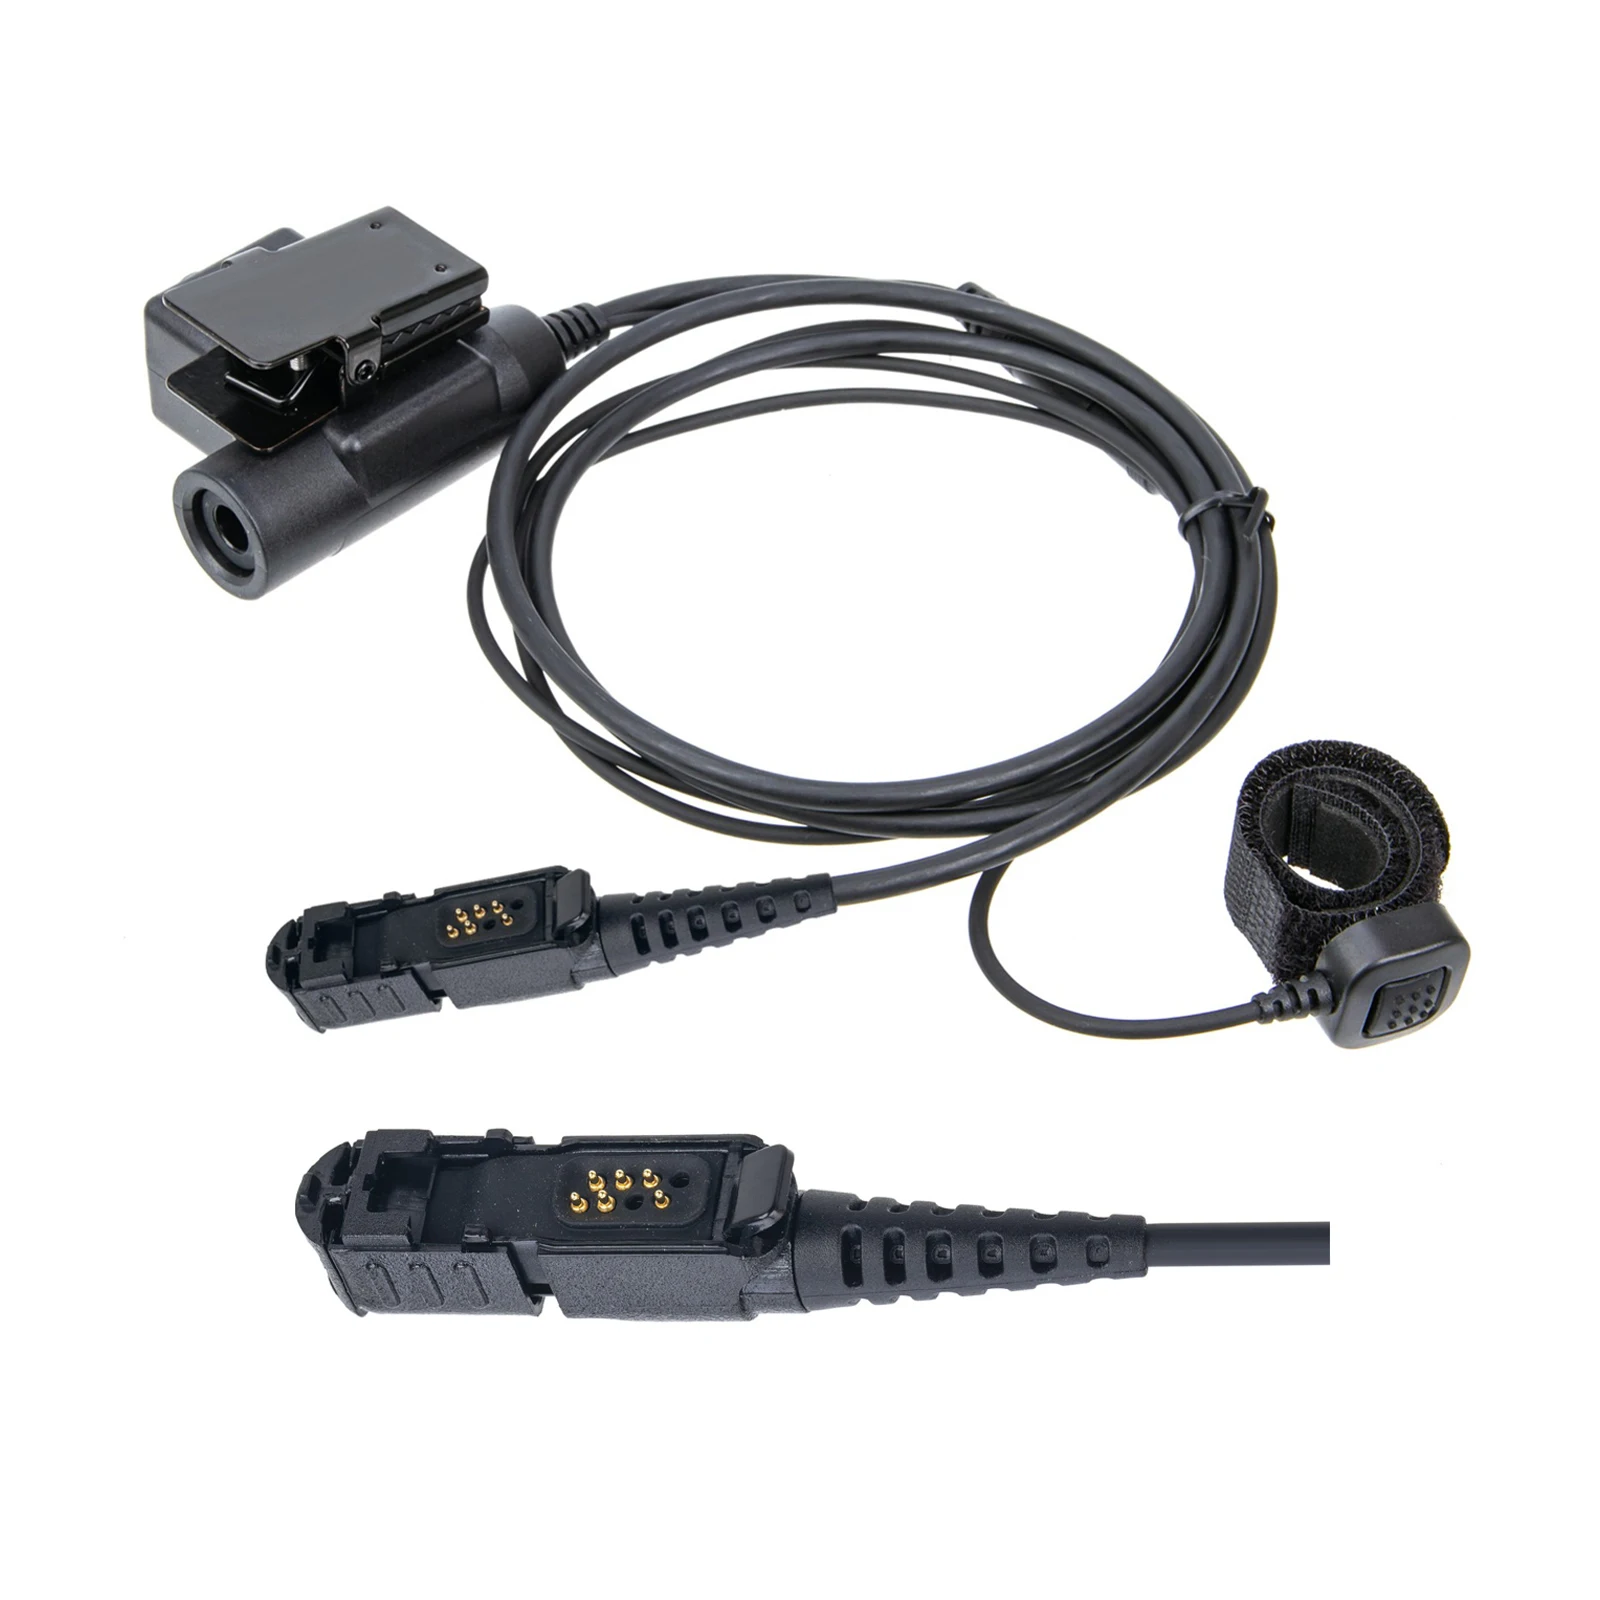 High Strength U94 PTT Finger Microphone Adapter for Walkie Talkie XiR P6600 P6620 DP2400 DEP550 MTP3550 MTP3150 Radio